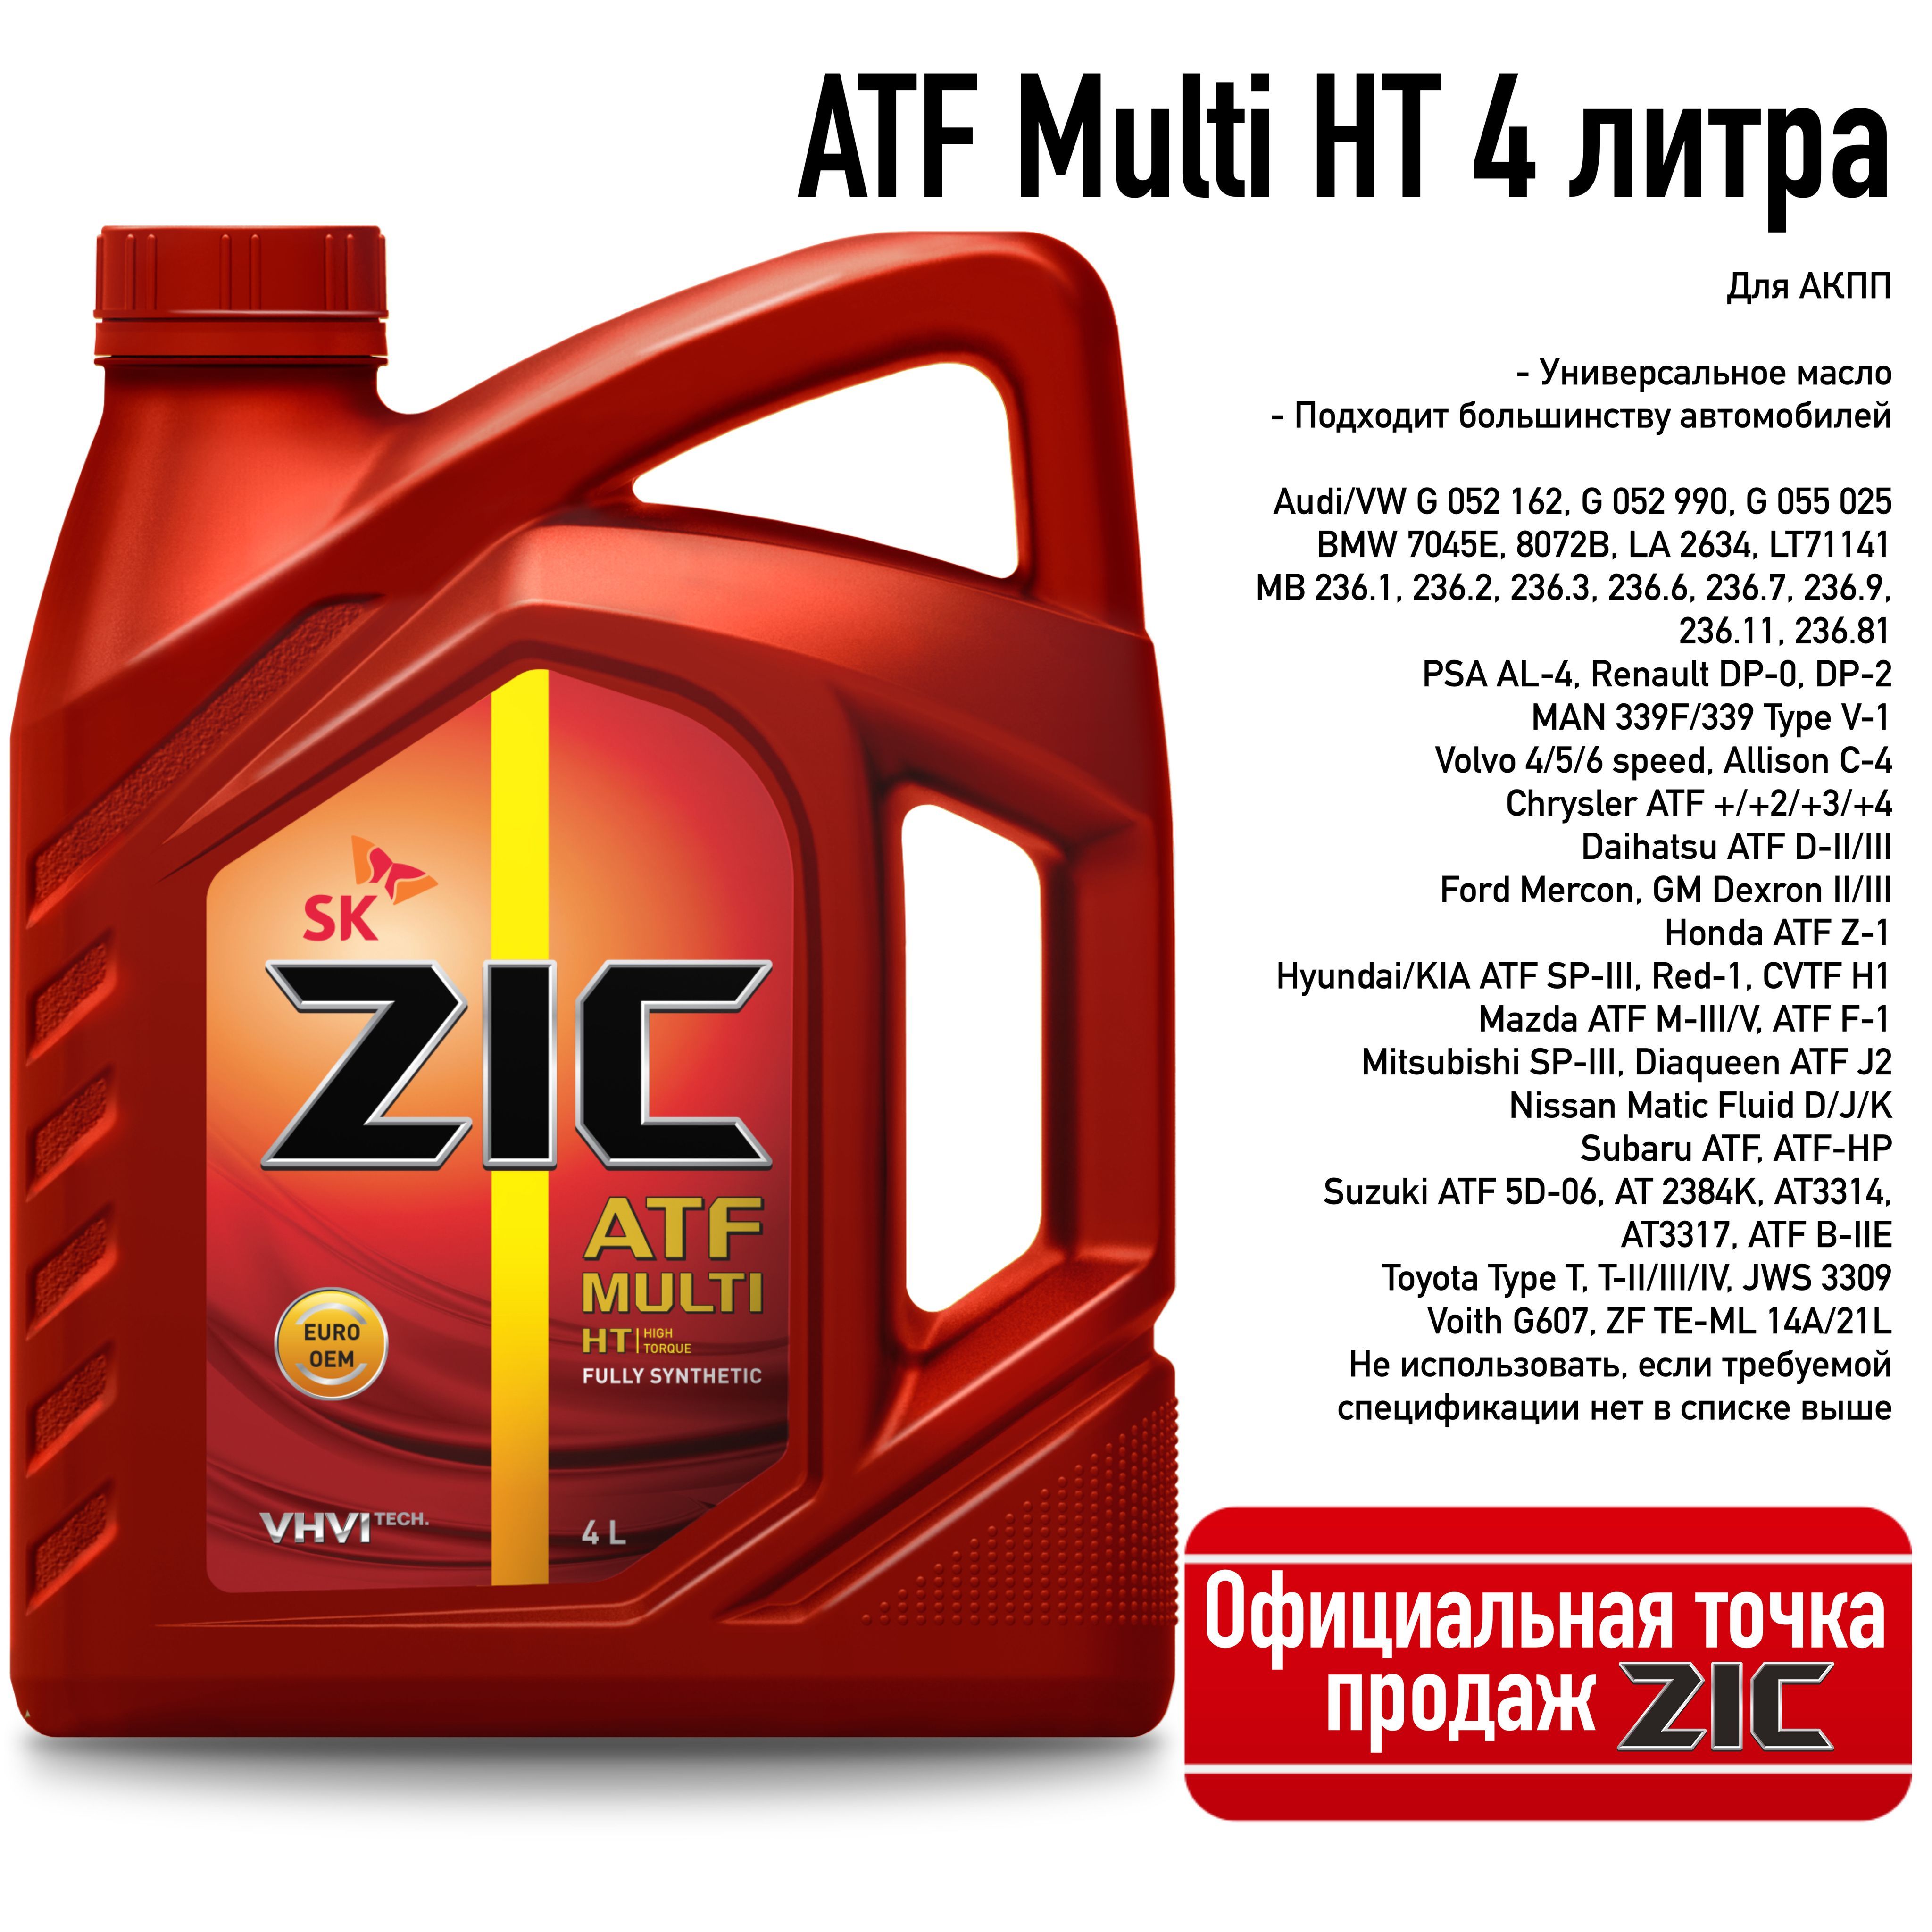 ZIC ATF Multi HT. ZIC ATF Multi LF цвет. ZIC ATF Multi HT В Kia Rio. Масло Mercon lv аналог ZIC ATF Multi LF.